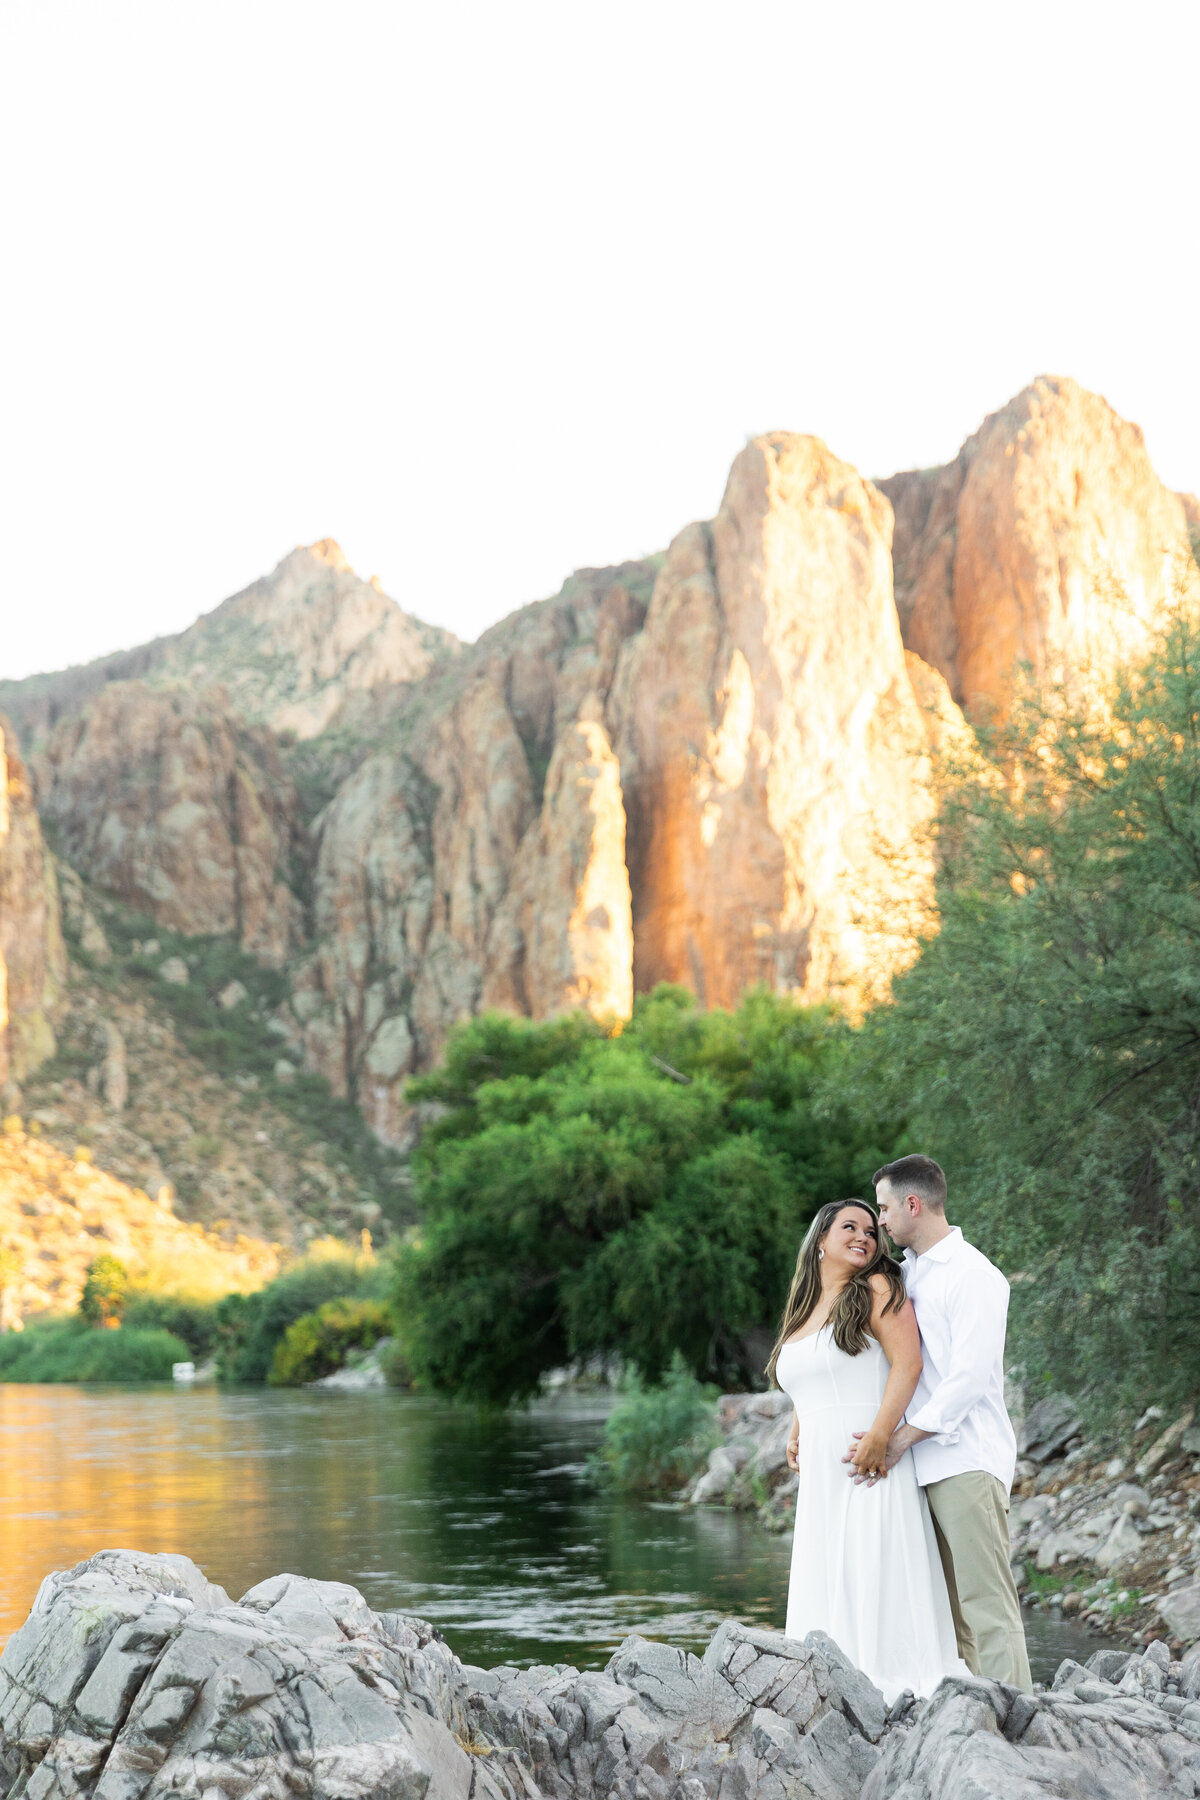 Karlie Colleen Photography - Kaitlyn & Cristian Engagement Session - Salt River Arizona-257